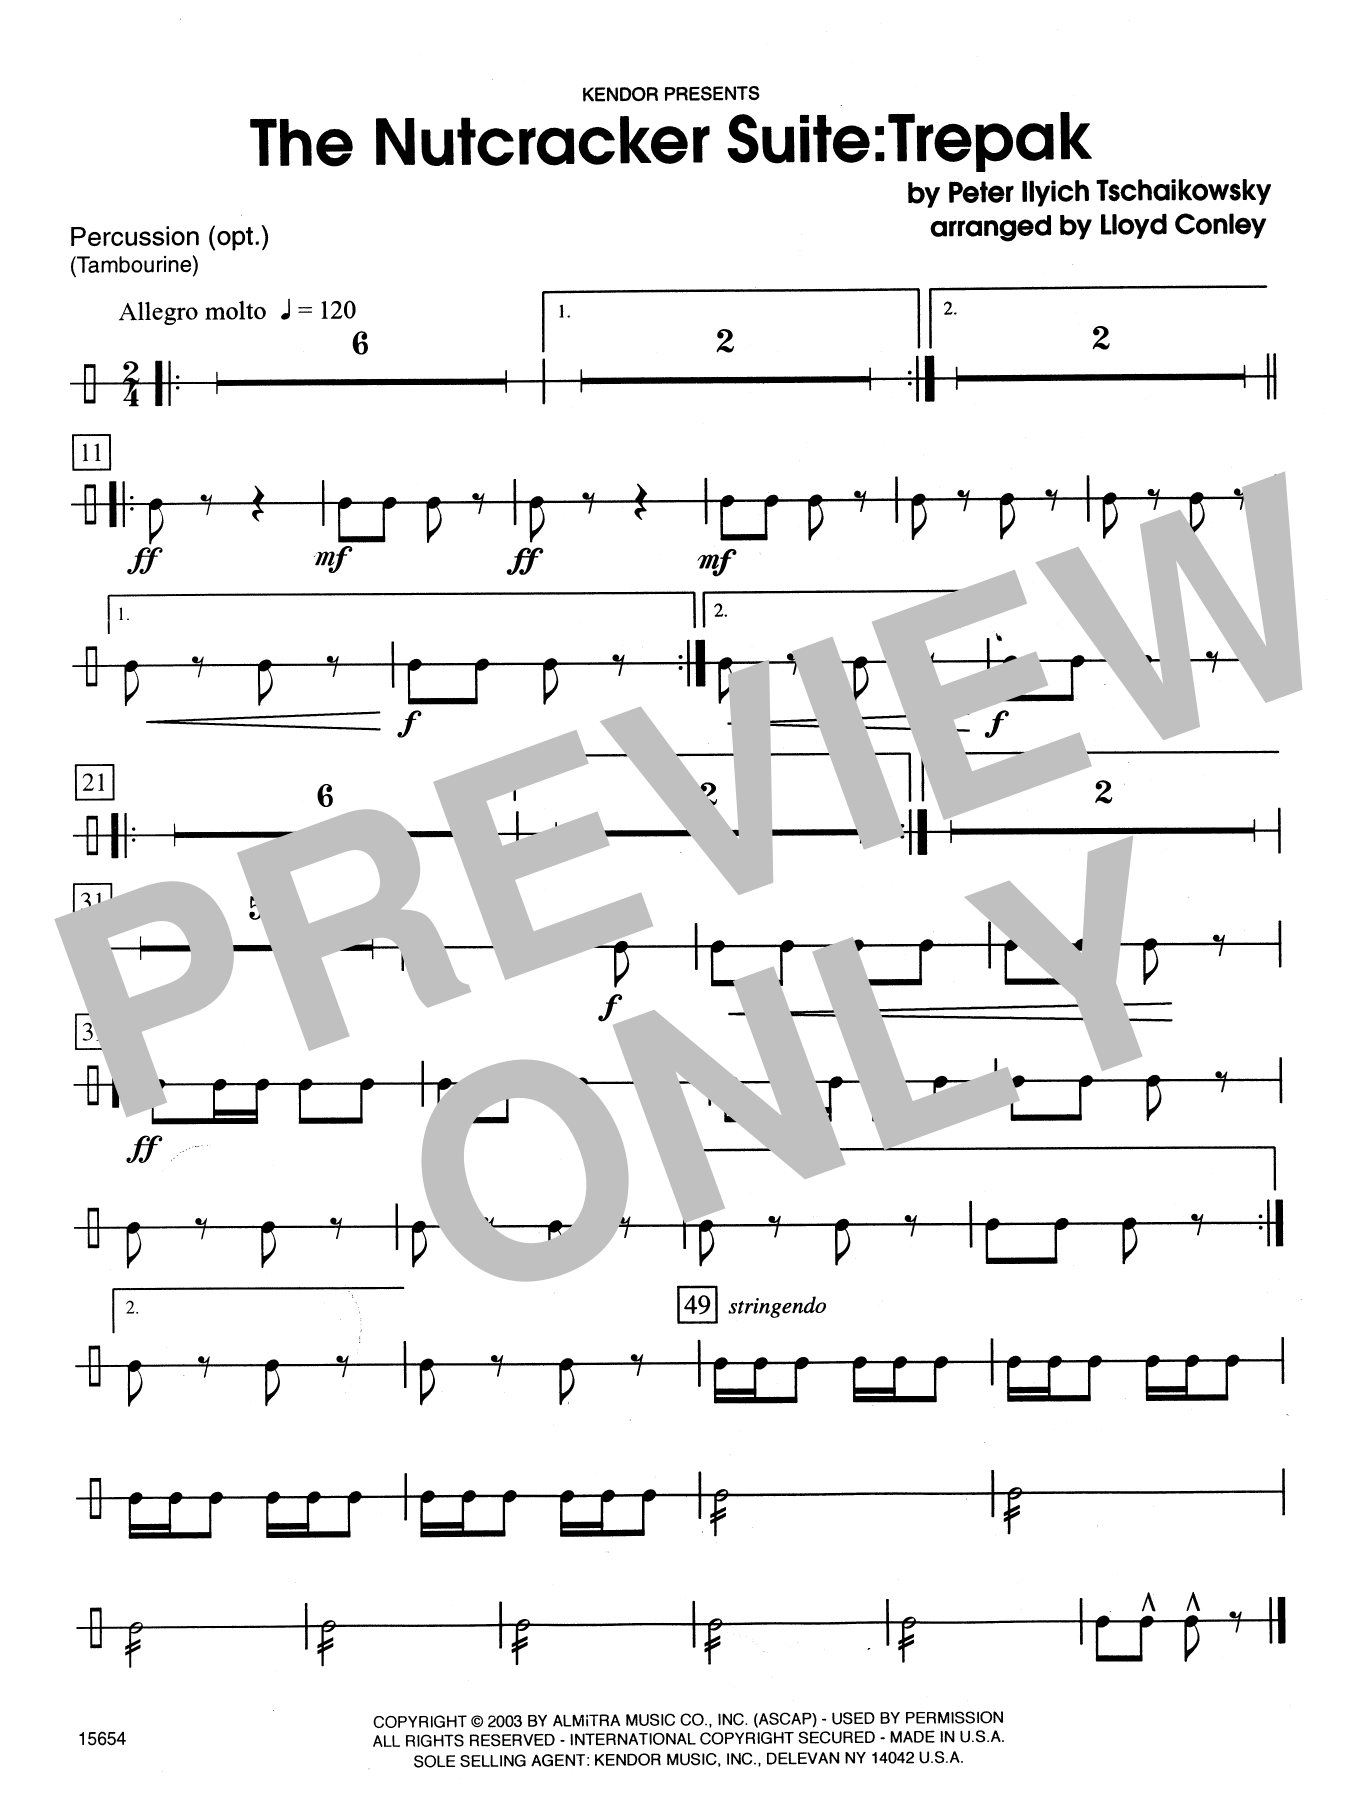 Download Lloyd Conley The Nutcracker Suite: Trepak - Percussi Sheet Music